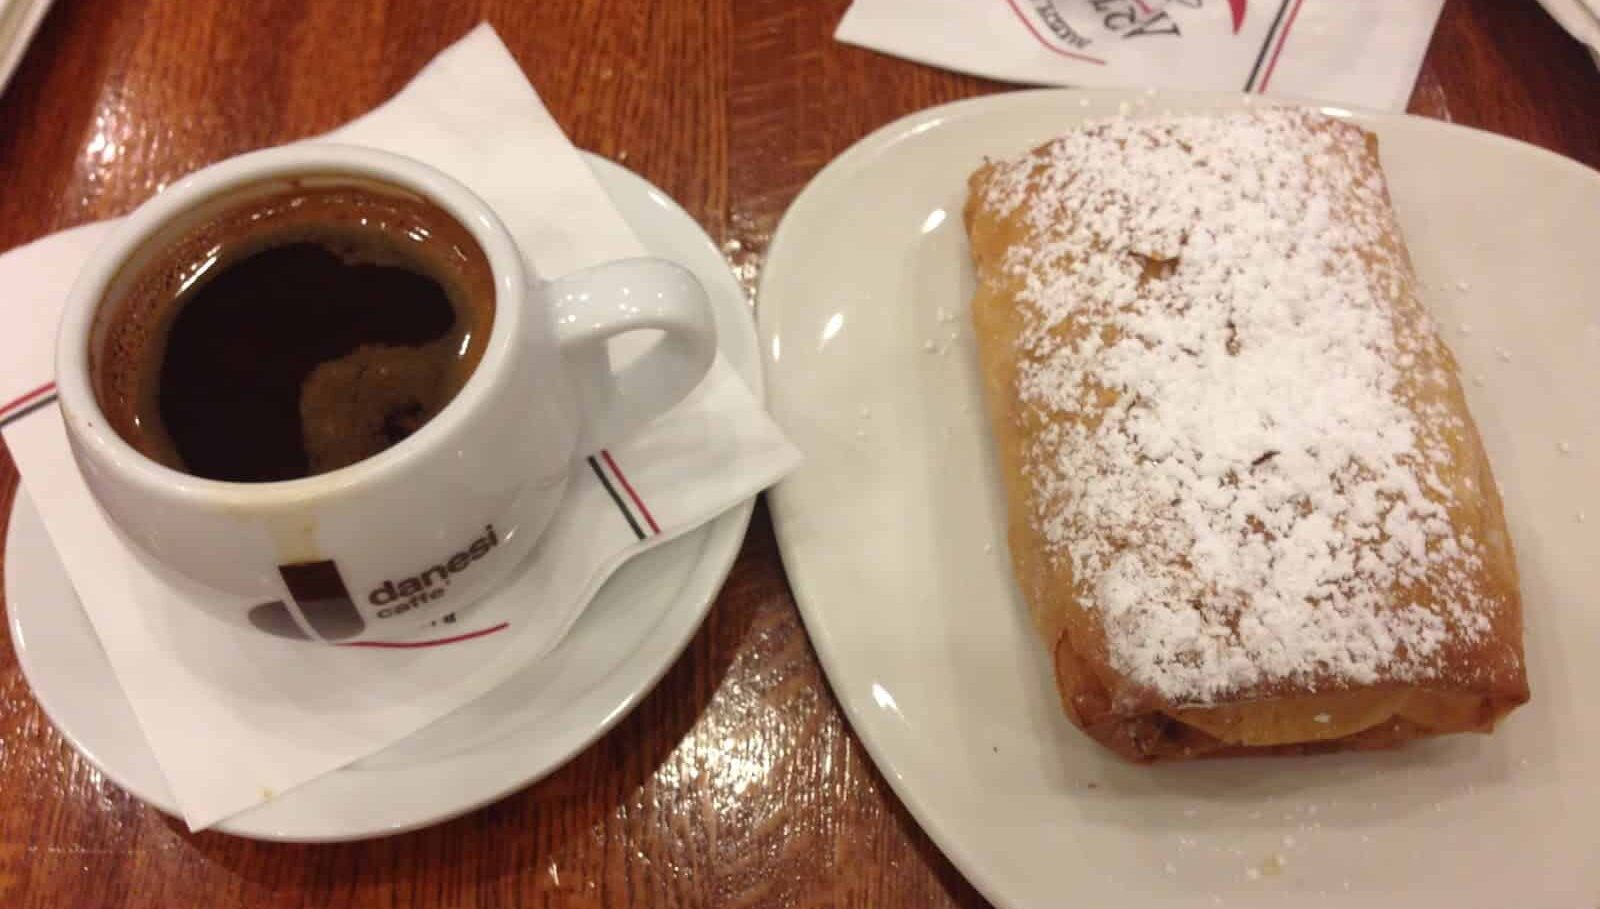 Greek coffee and bougatsa at Artopolis Bakery and Café